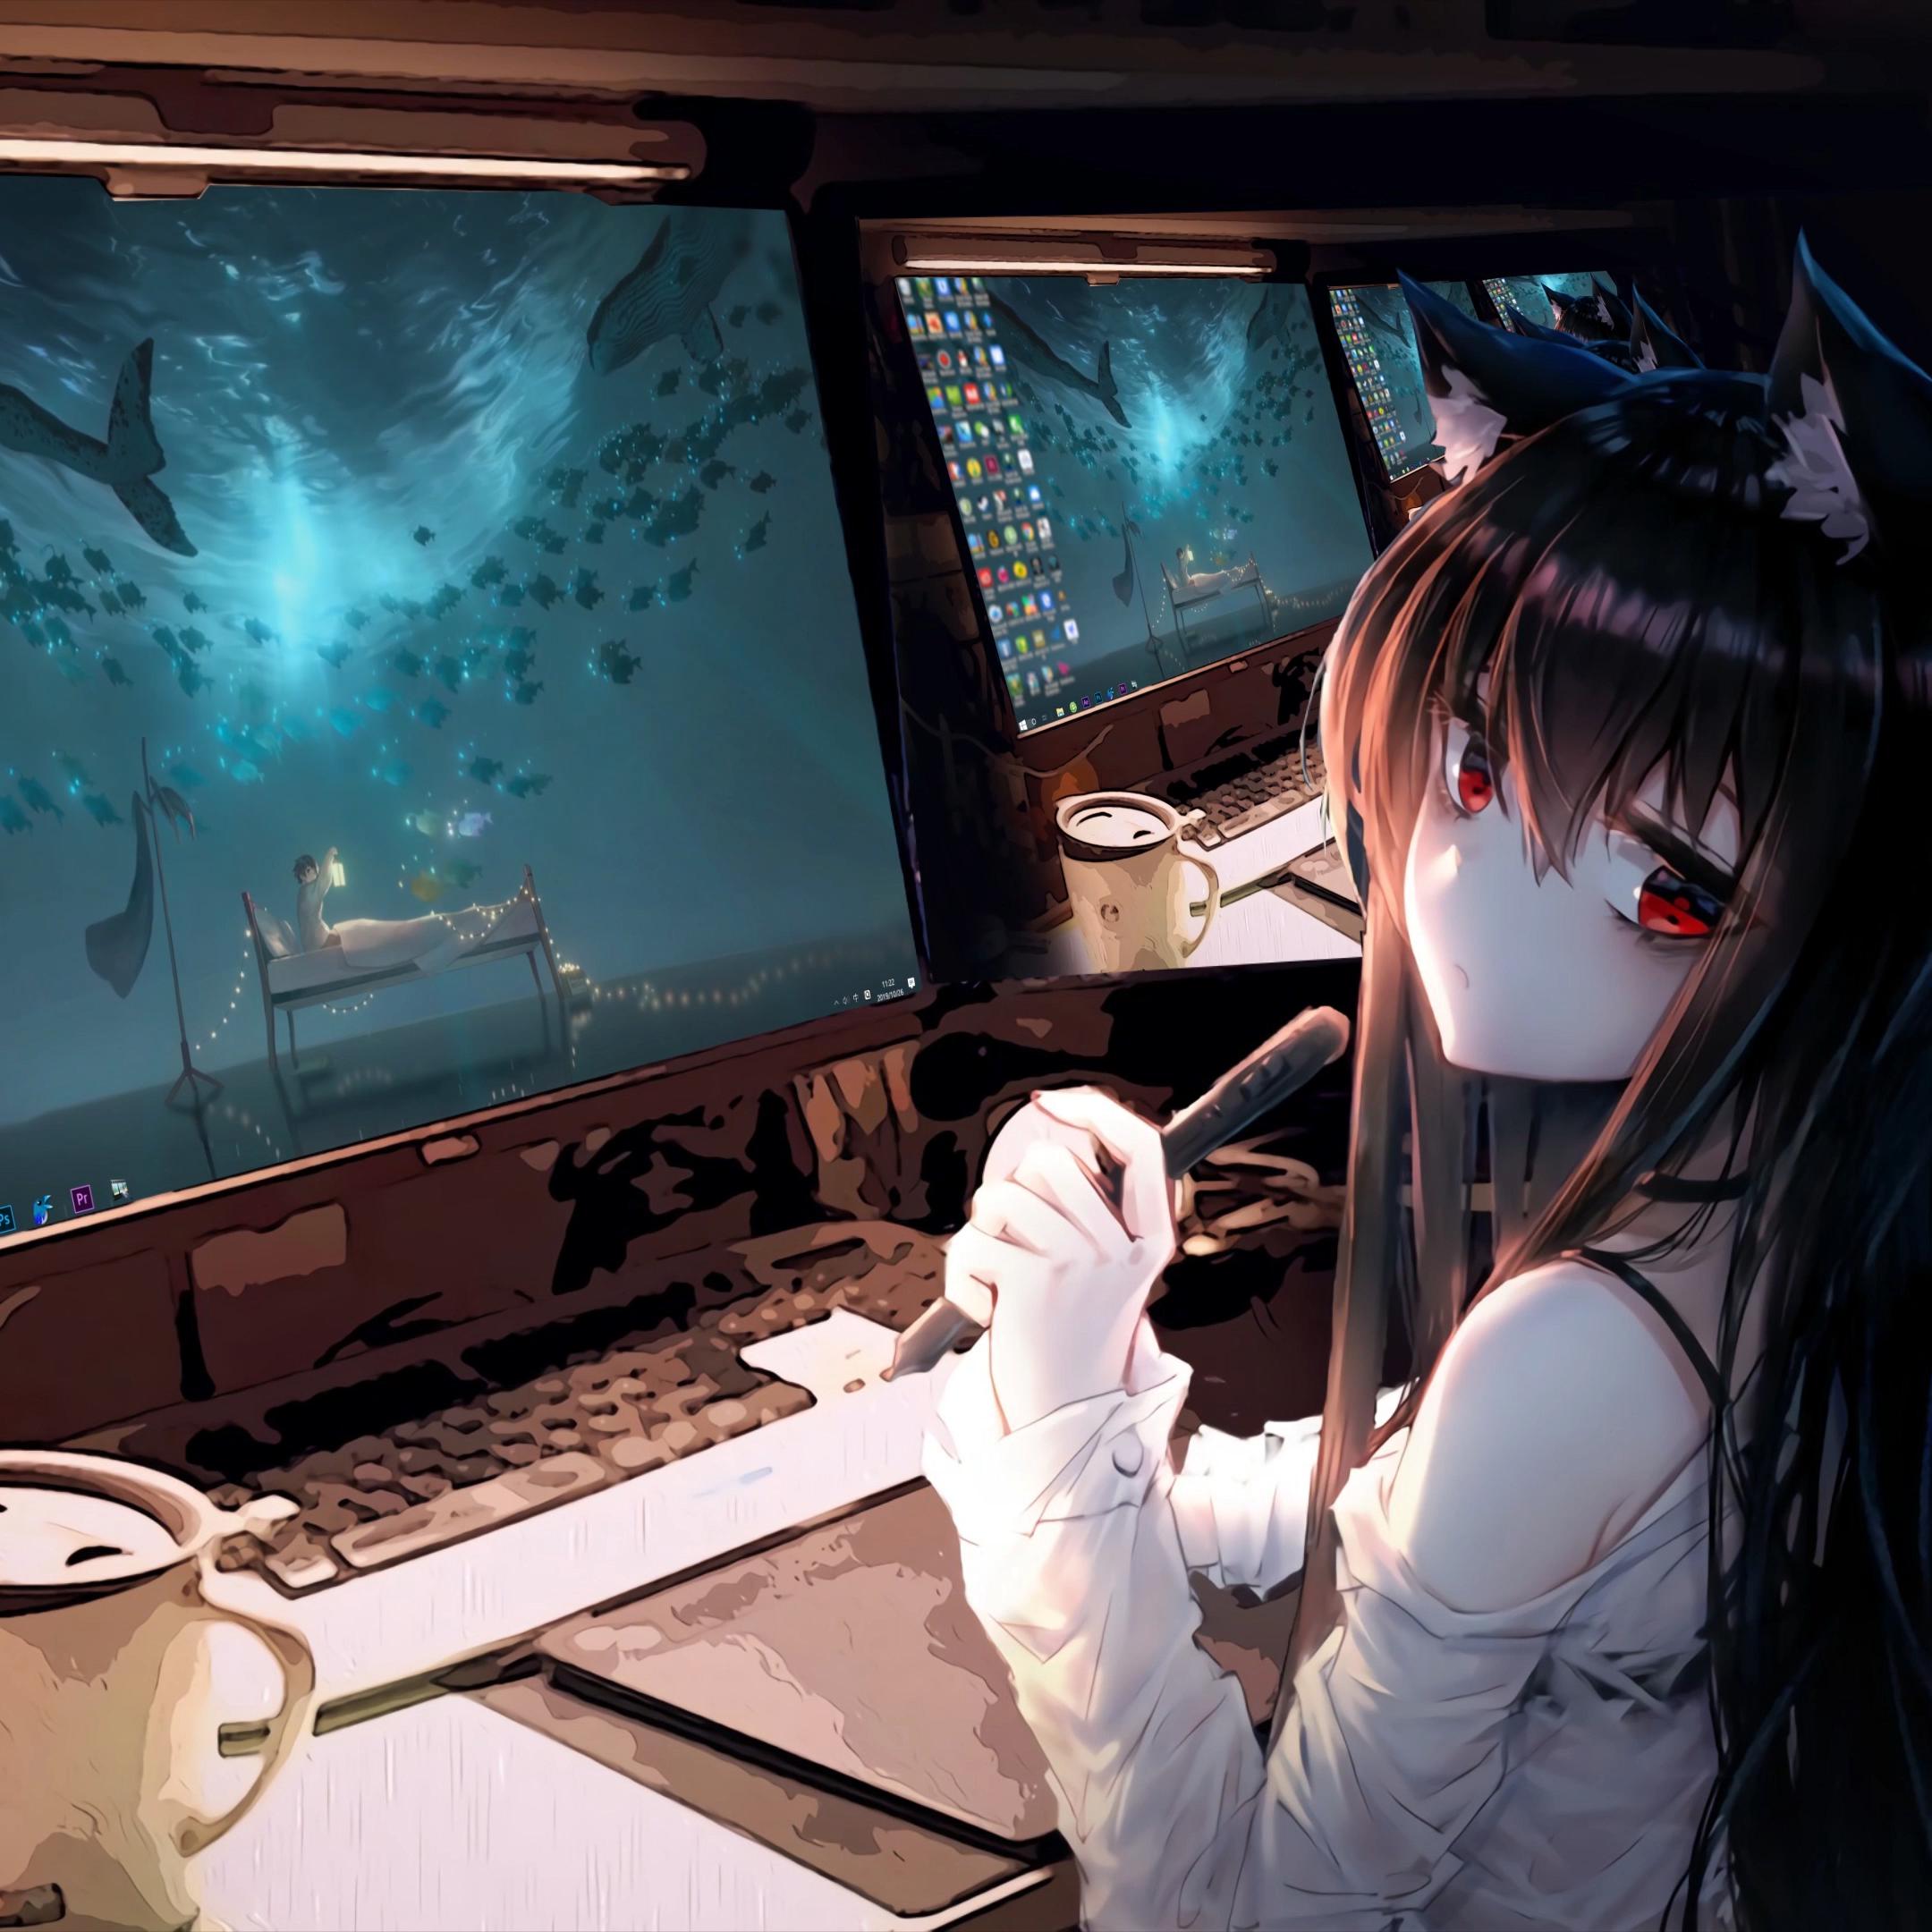 Anime Girl and Computers 4K Live Wallpaper